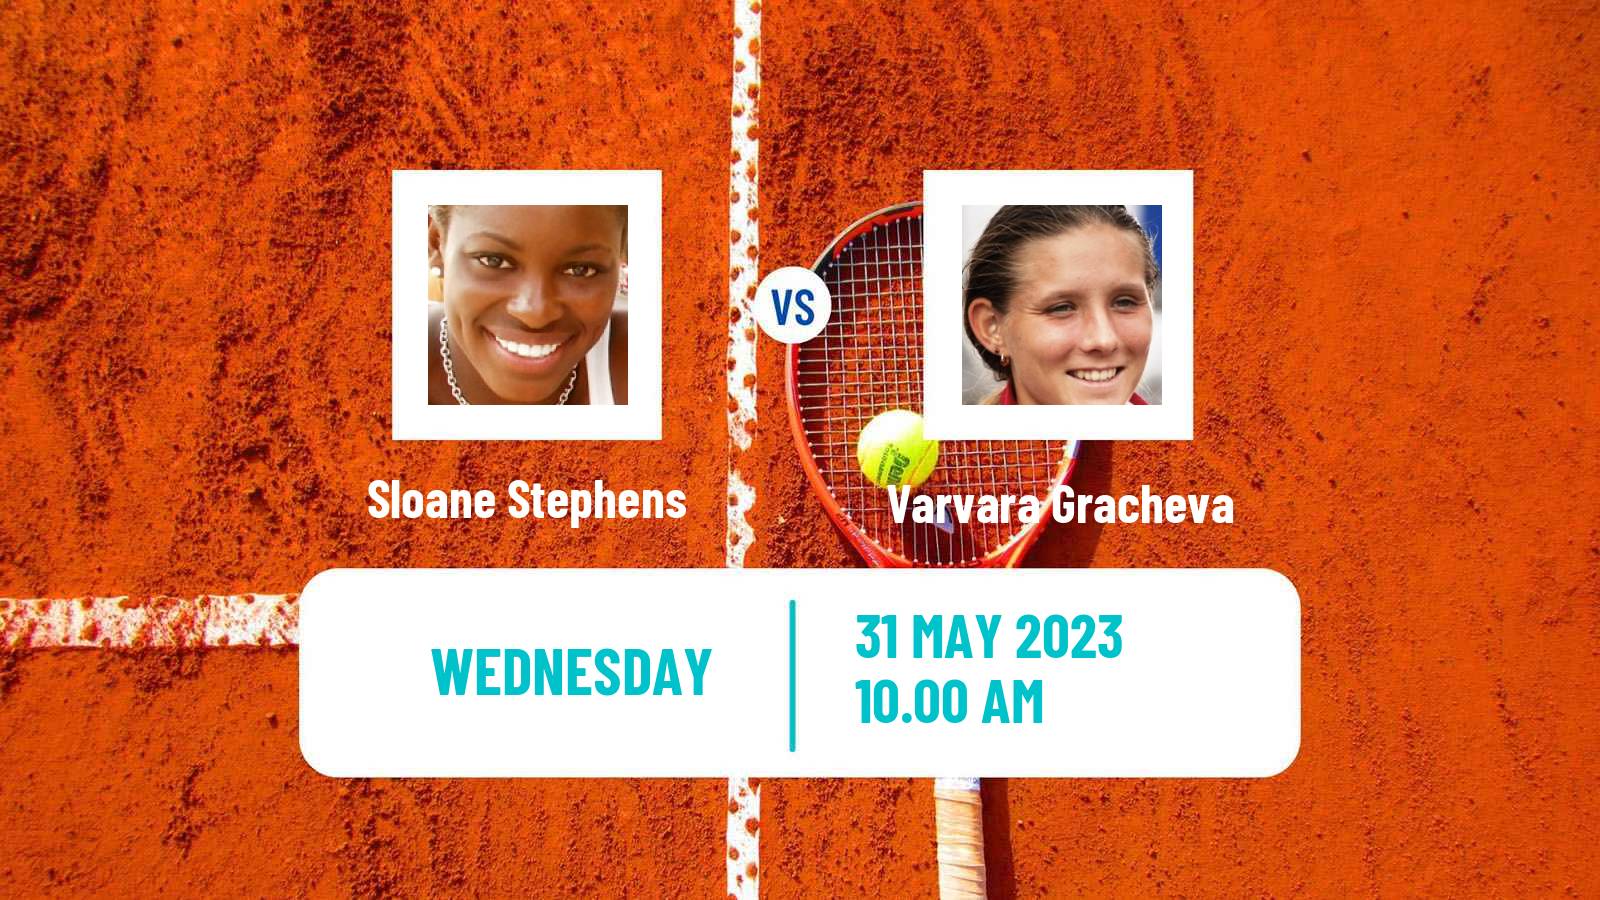 Tennis WTA Roland Garros Sloane Stephens - Varvara Gracheva